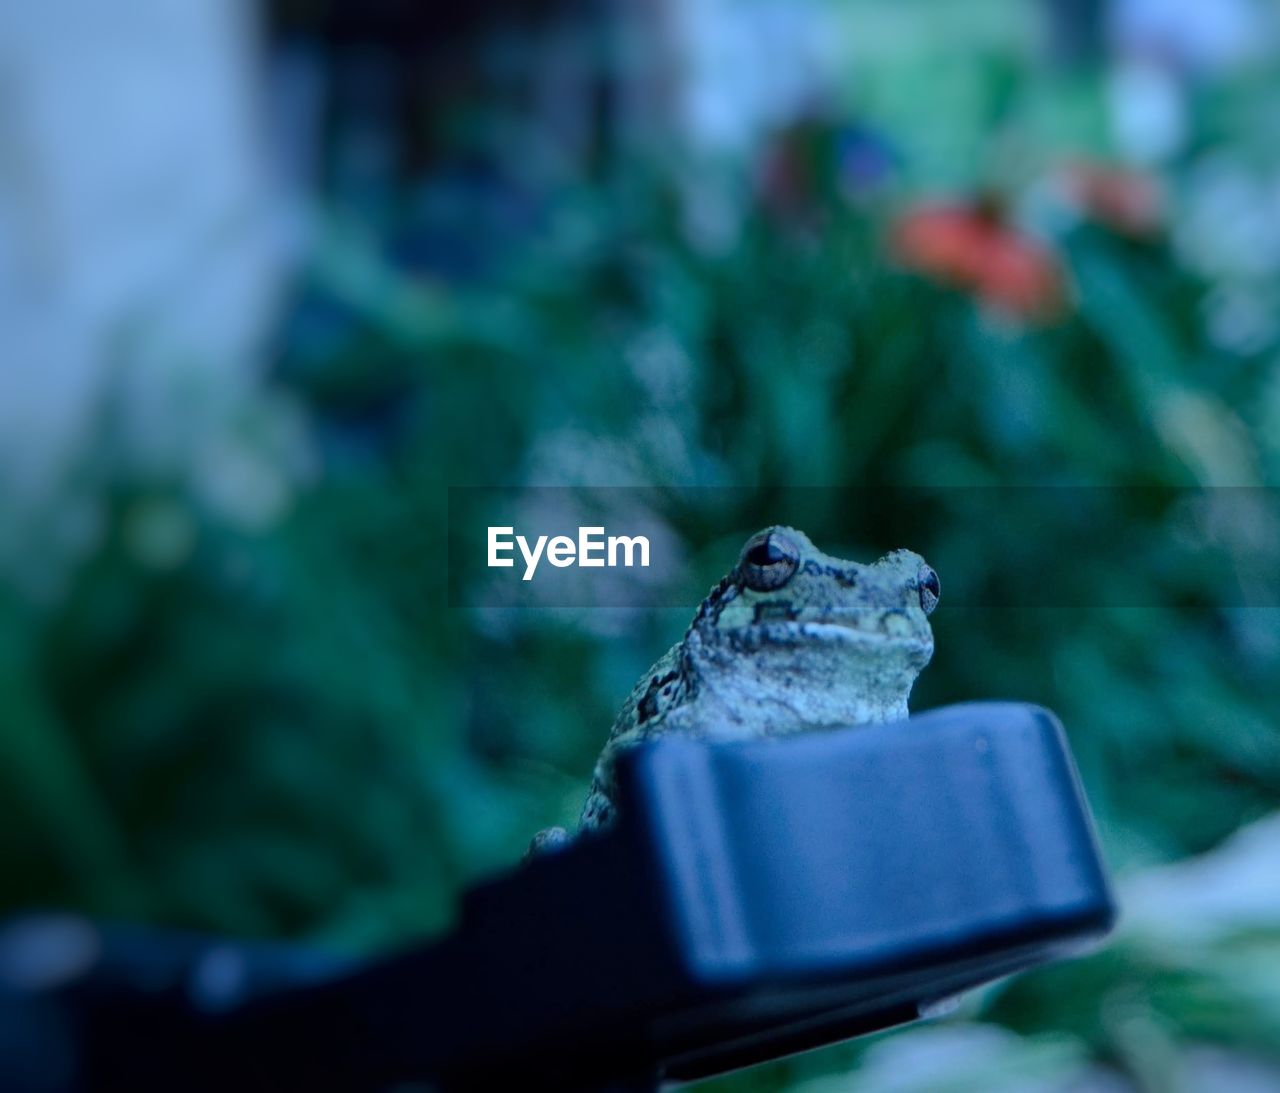 Frog on a tripod 